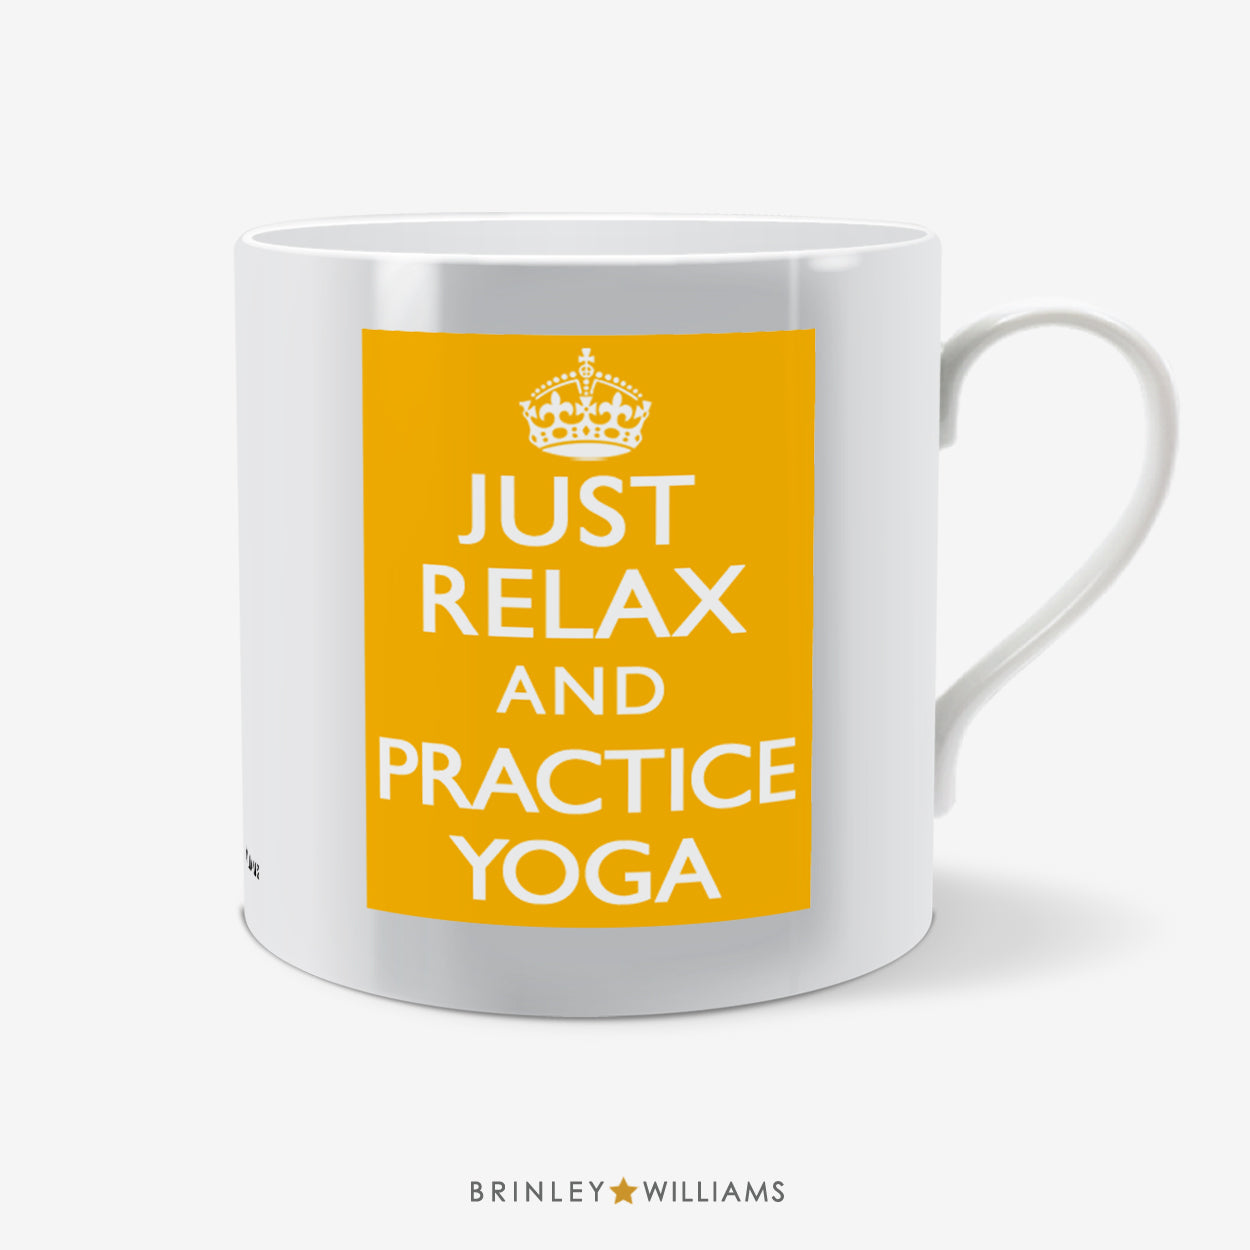 Just relax and practise Yoga Fun Mug - Yellow